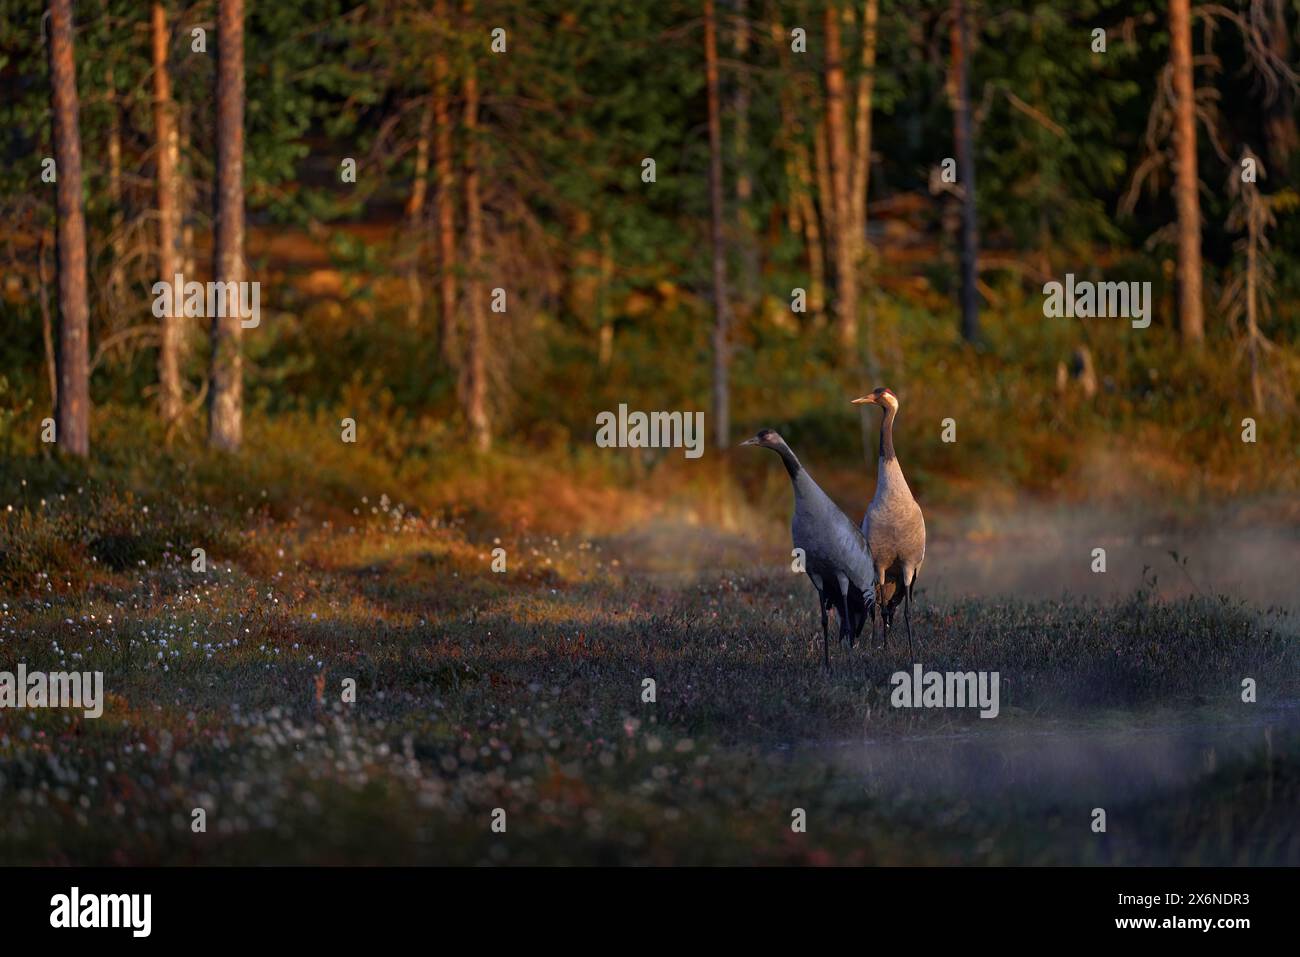 Finland wildlife. Common Crane, Grus grus, pair big bird in the nature habitat, Kuhmo, Finland. Wildlife scene from Europe. Grey crane with long neck. Stock Photo